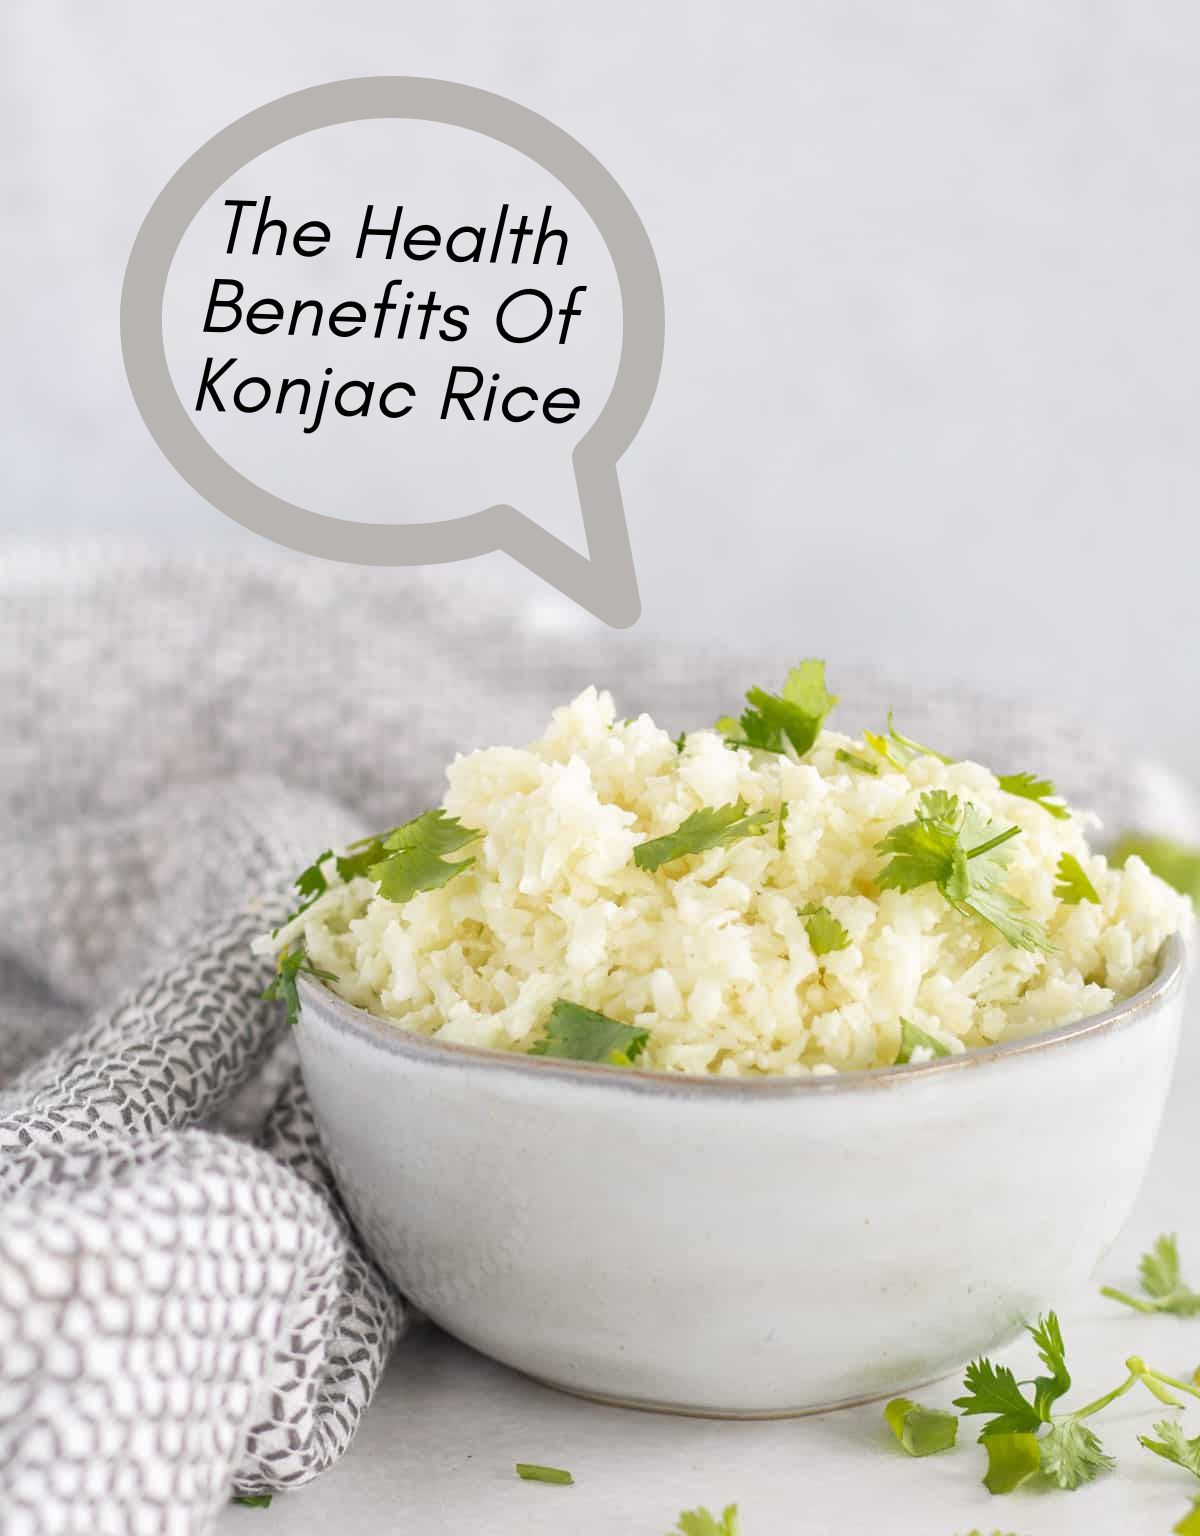 The Health Benefits Of Konjac Rice